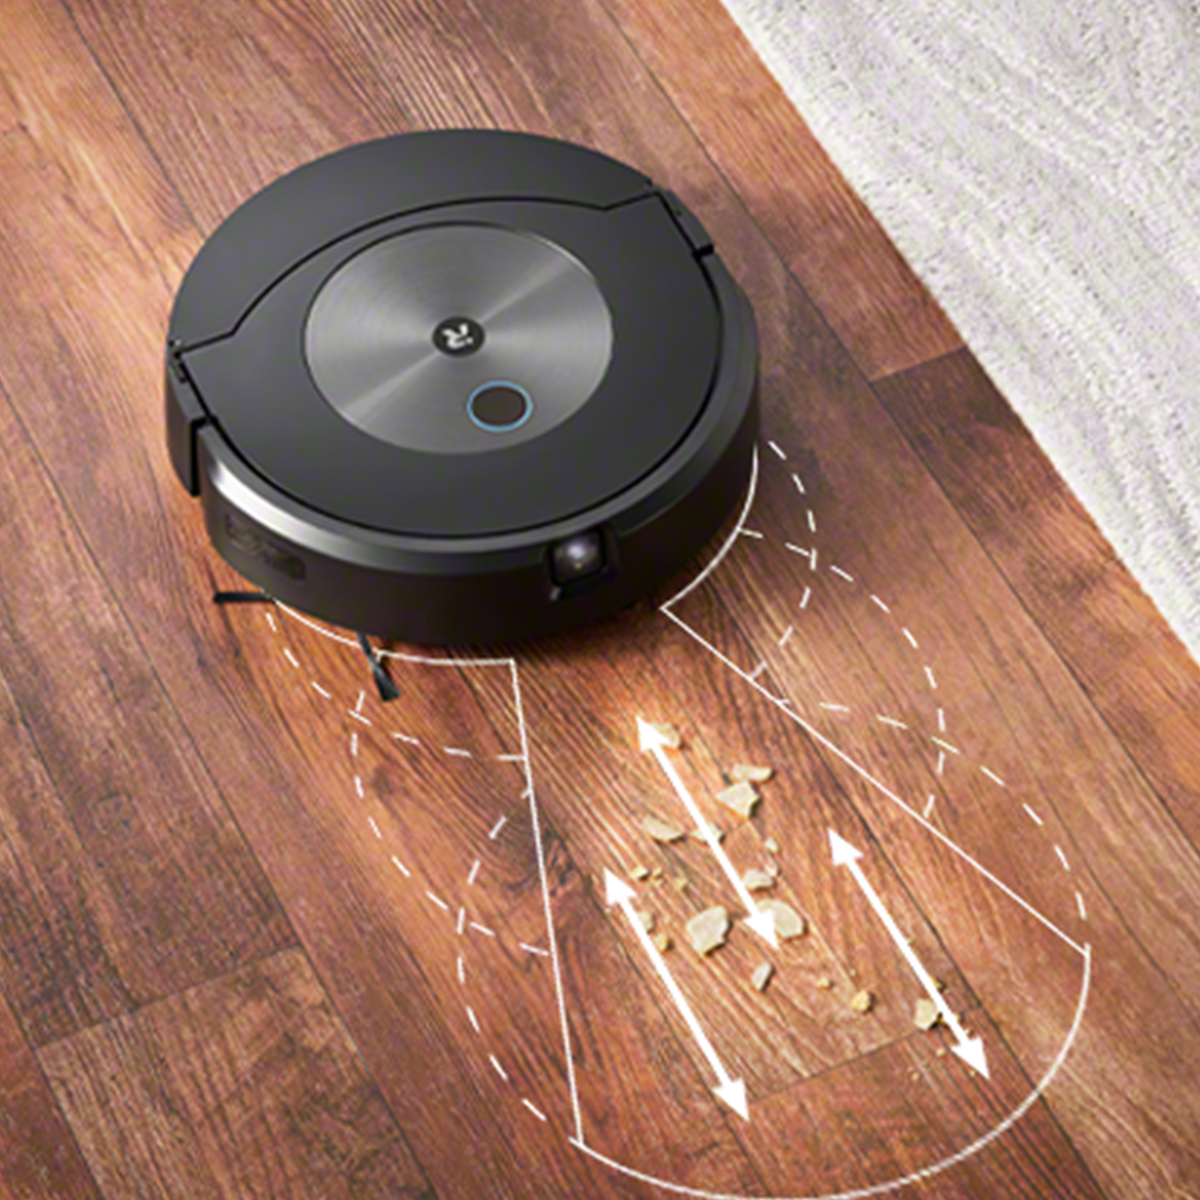 Robot aspirador y friegasuelos Roomba Combo® j7 con conexión Wi-Fi